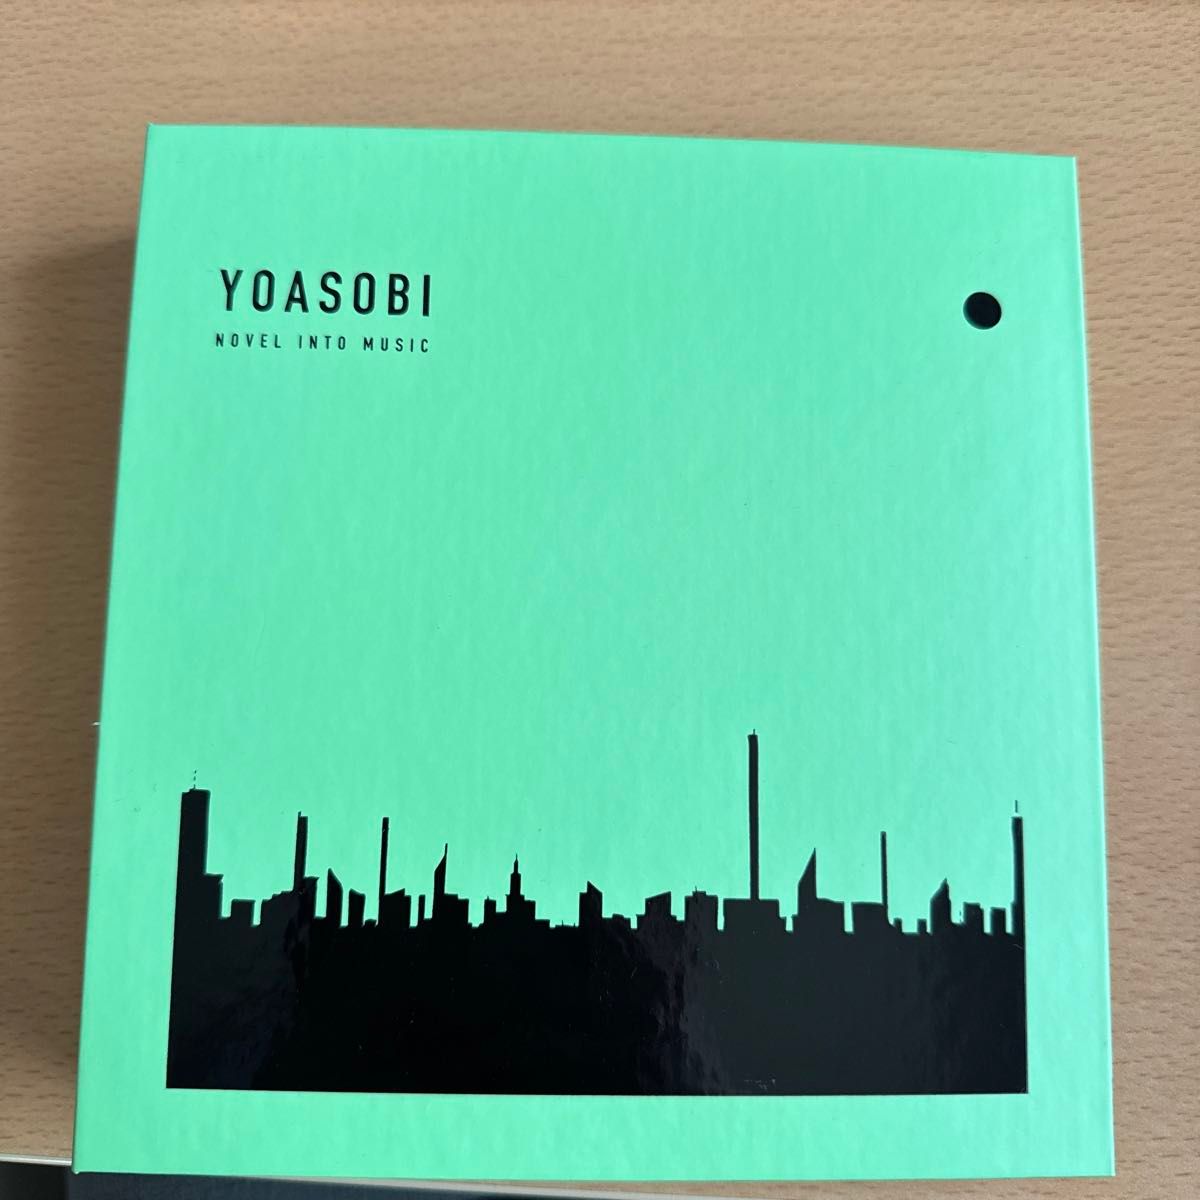 YOASOBI THE BOOK THE BOOK 2 怪物/優しい彗星　会員限定盤